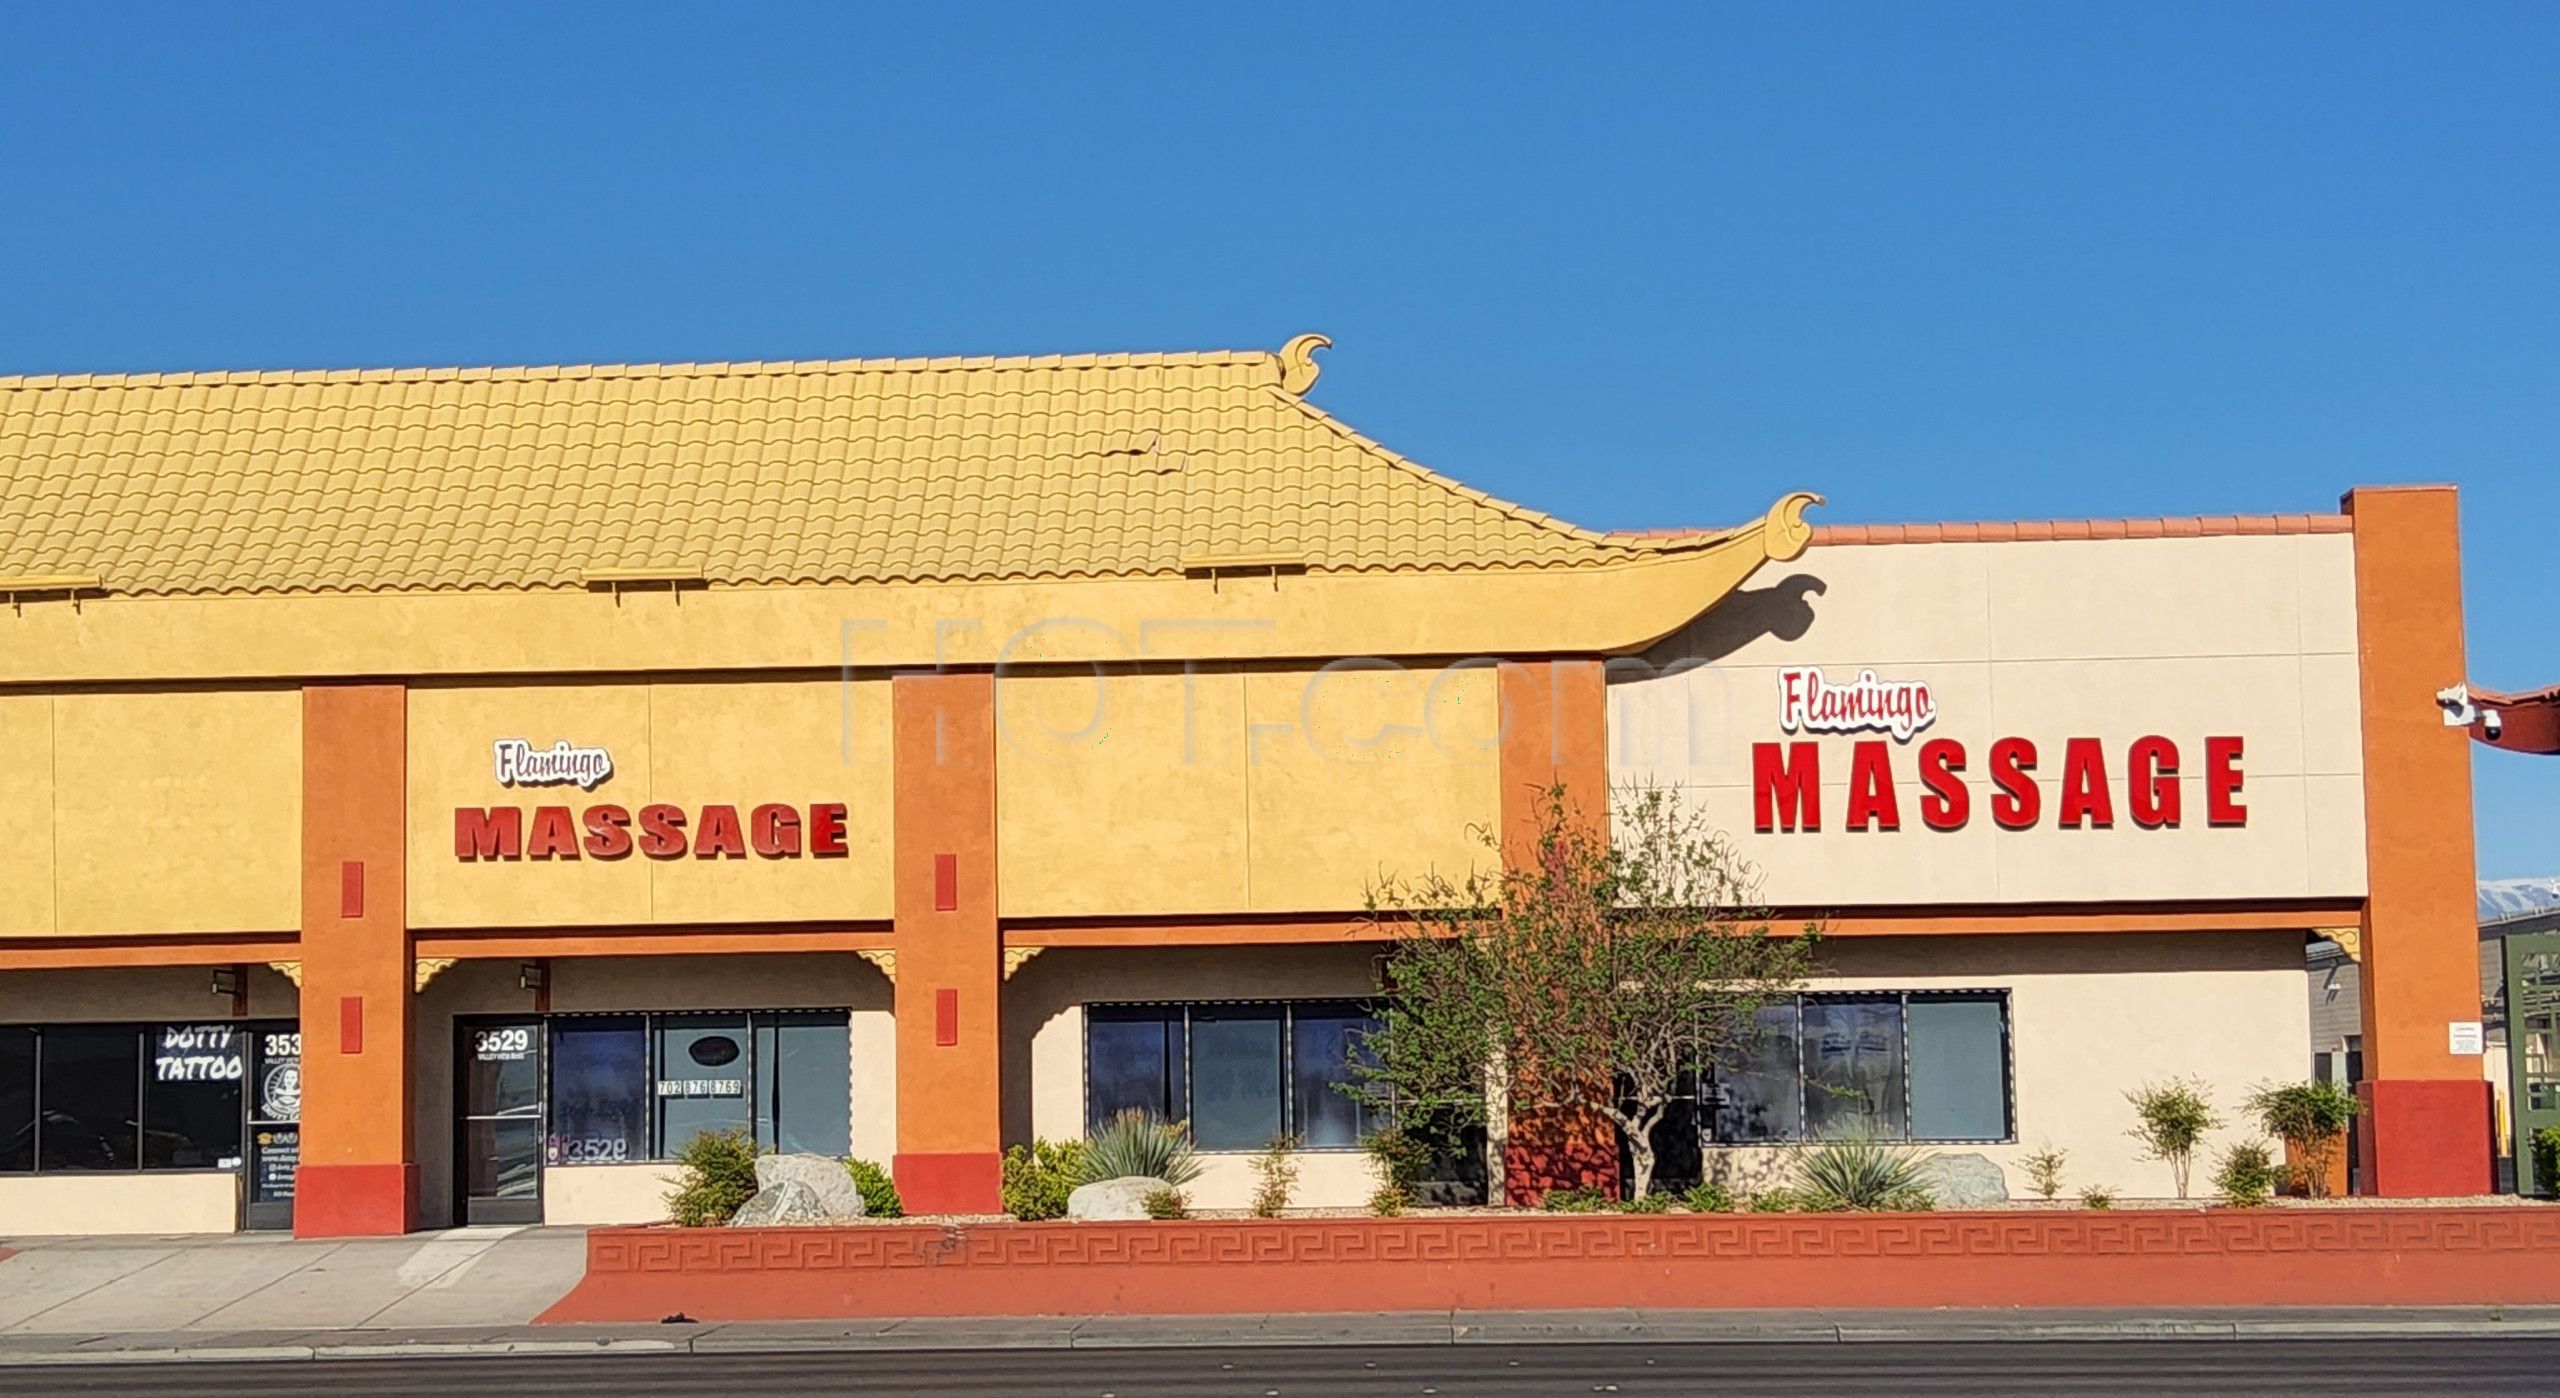 Las Vegas, Nevada Flamingo Massage